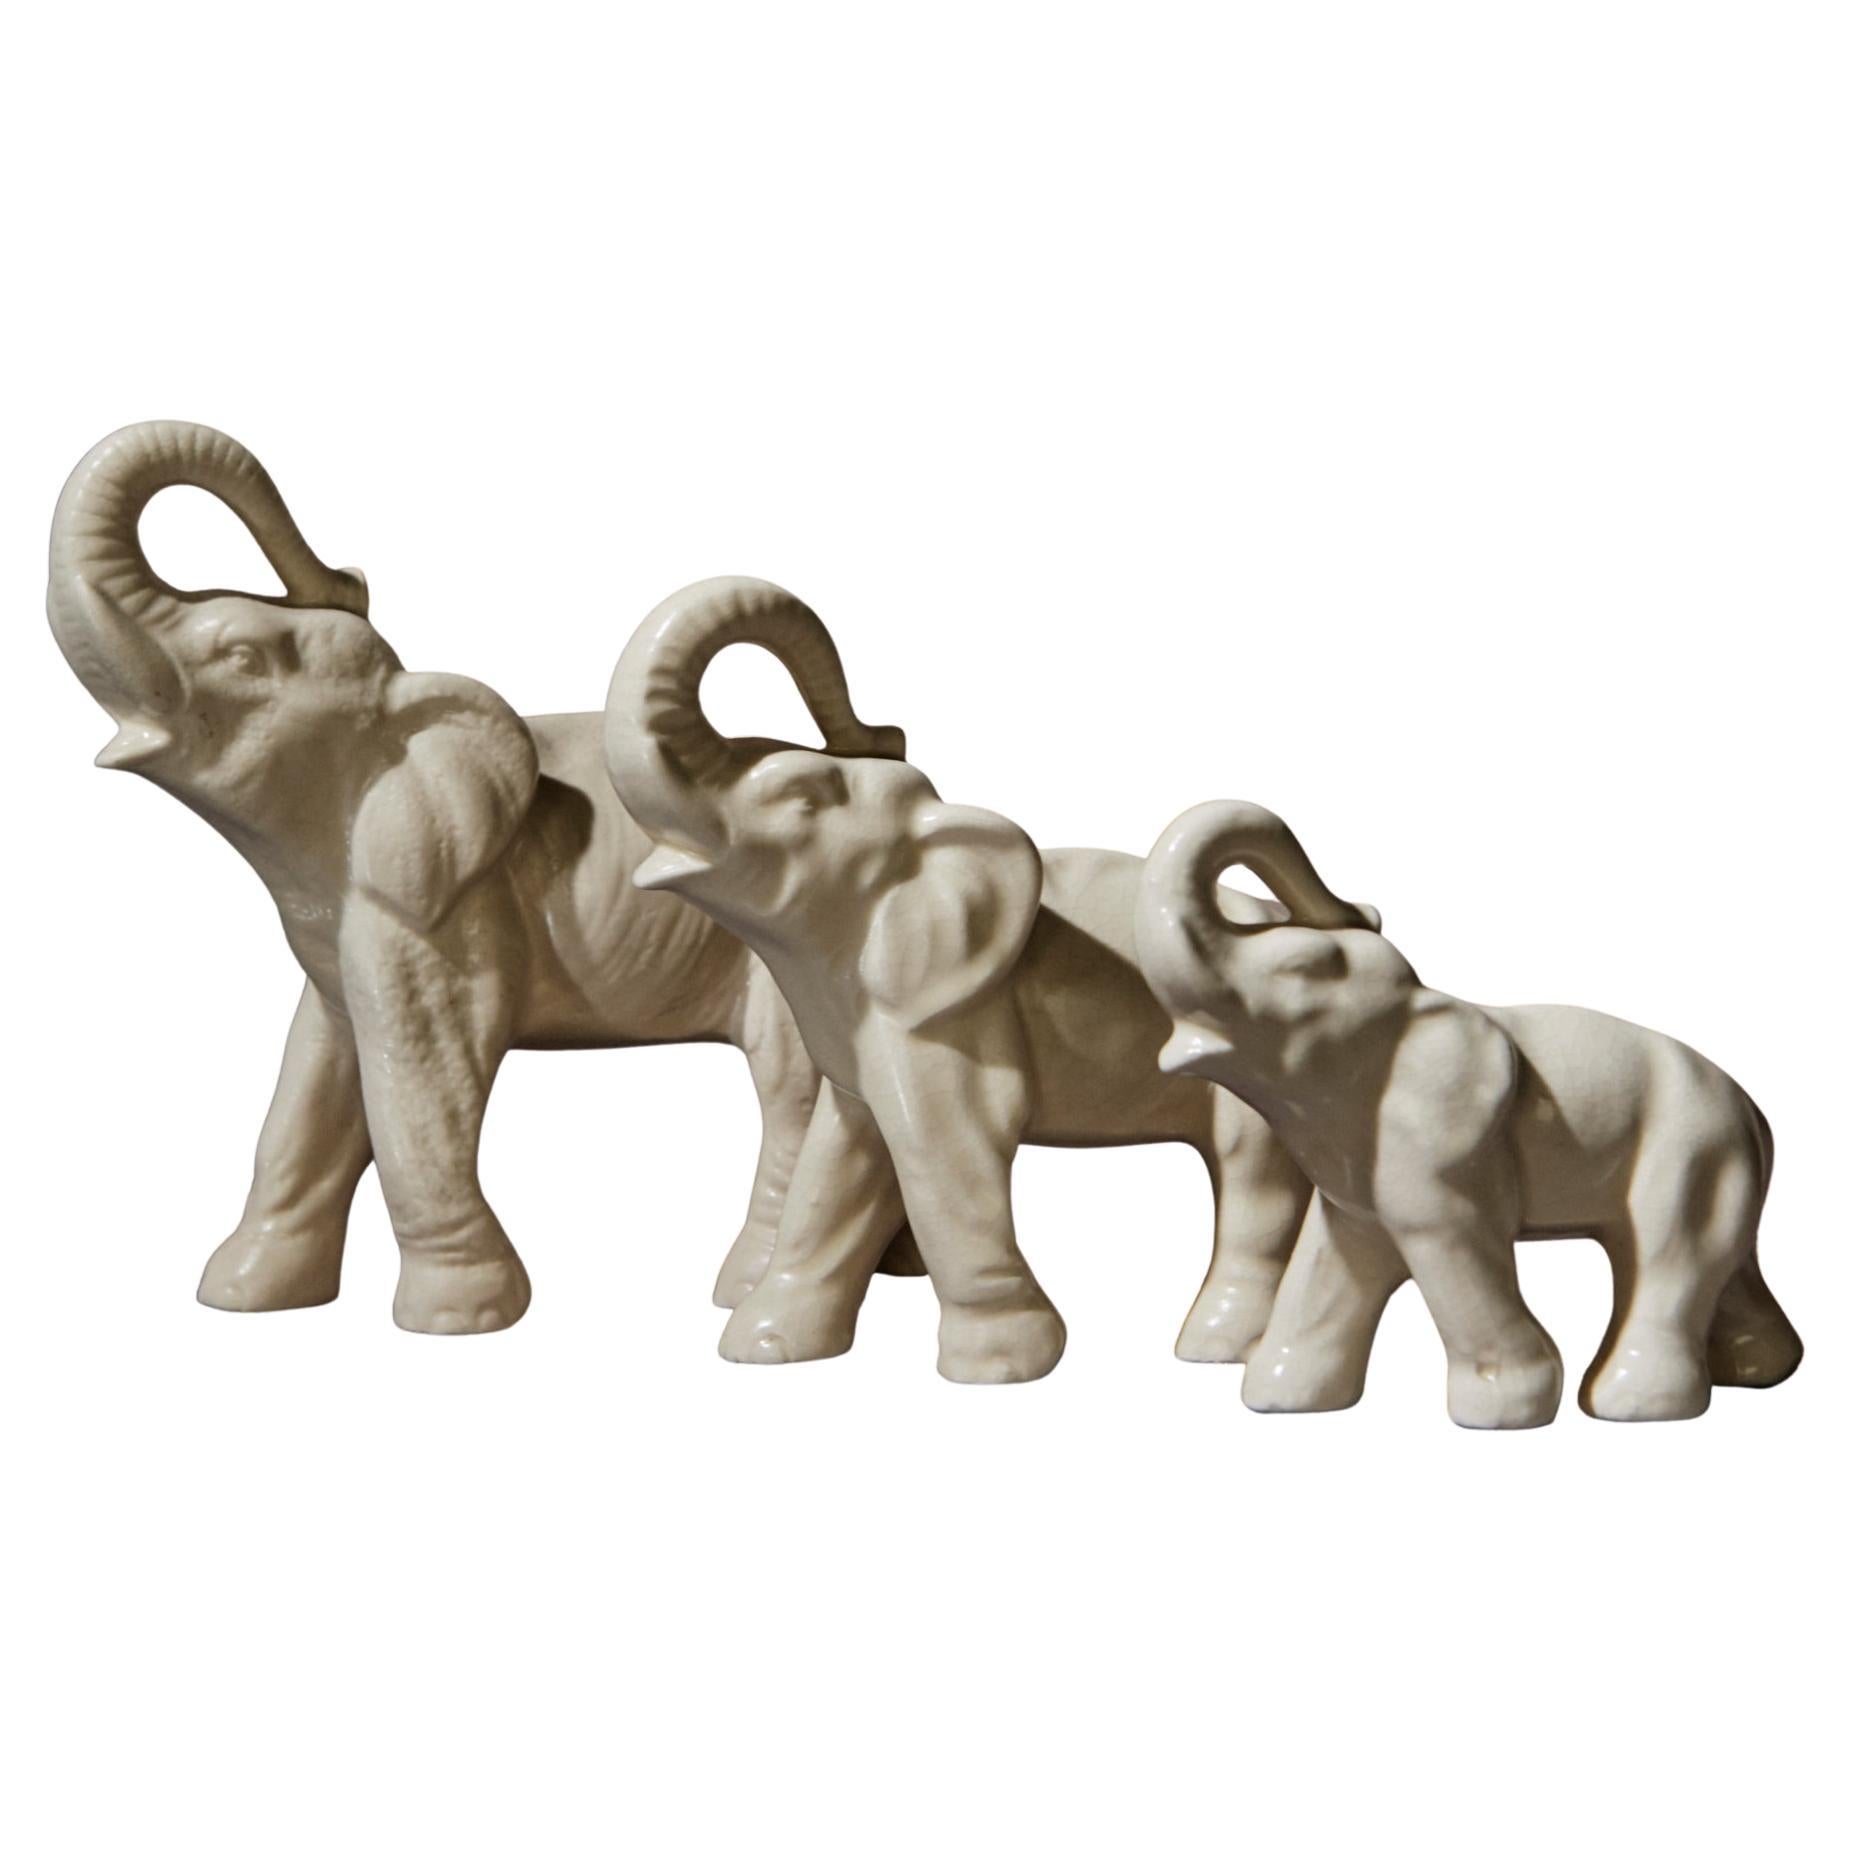 3 Ceramic Elephants by Anna-Lisa Thomson For Sale